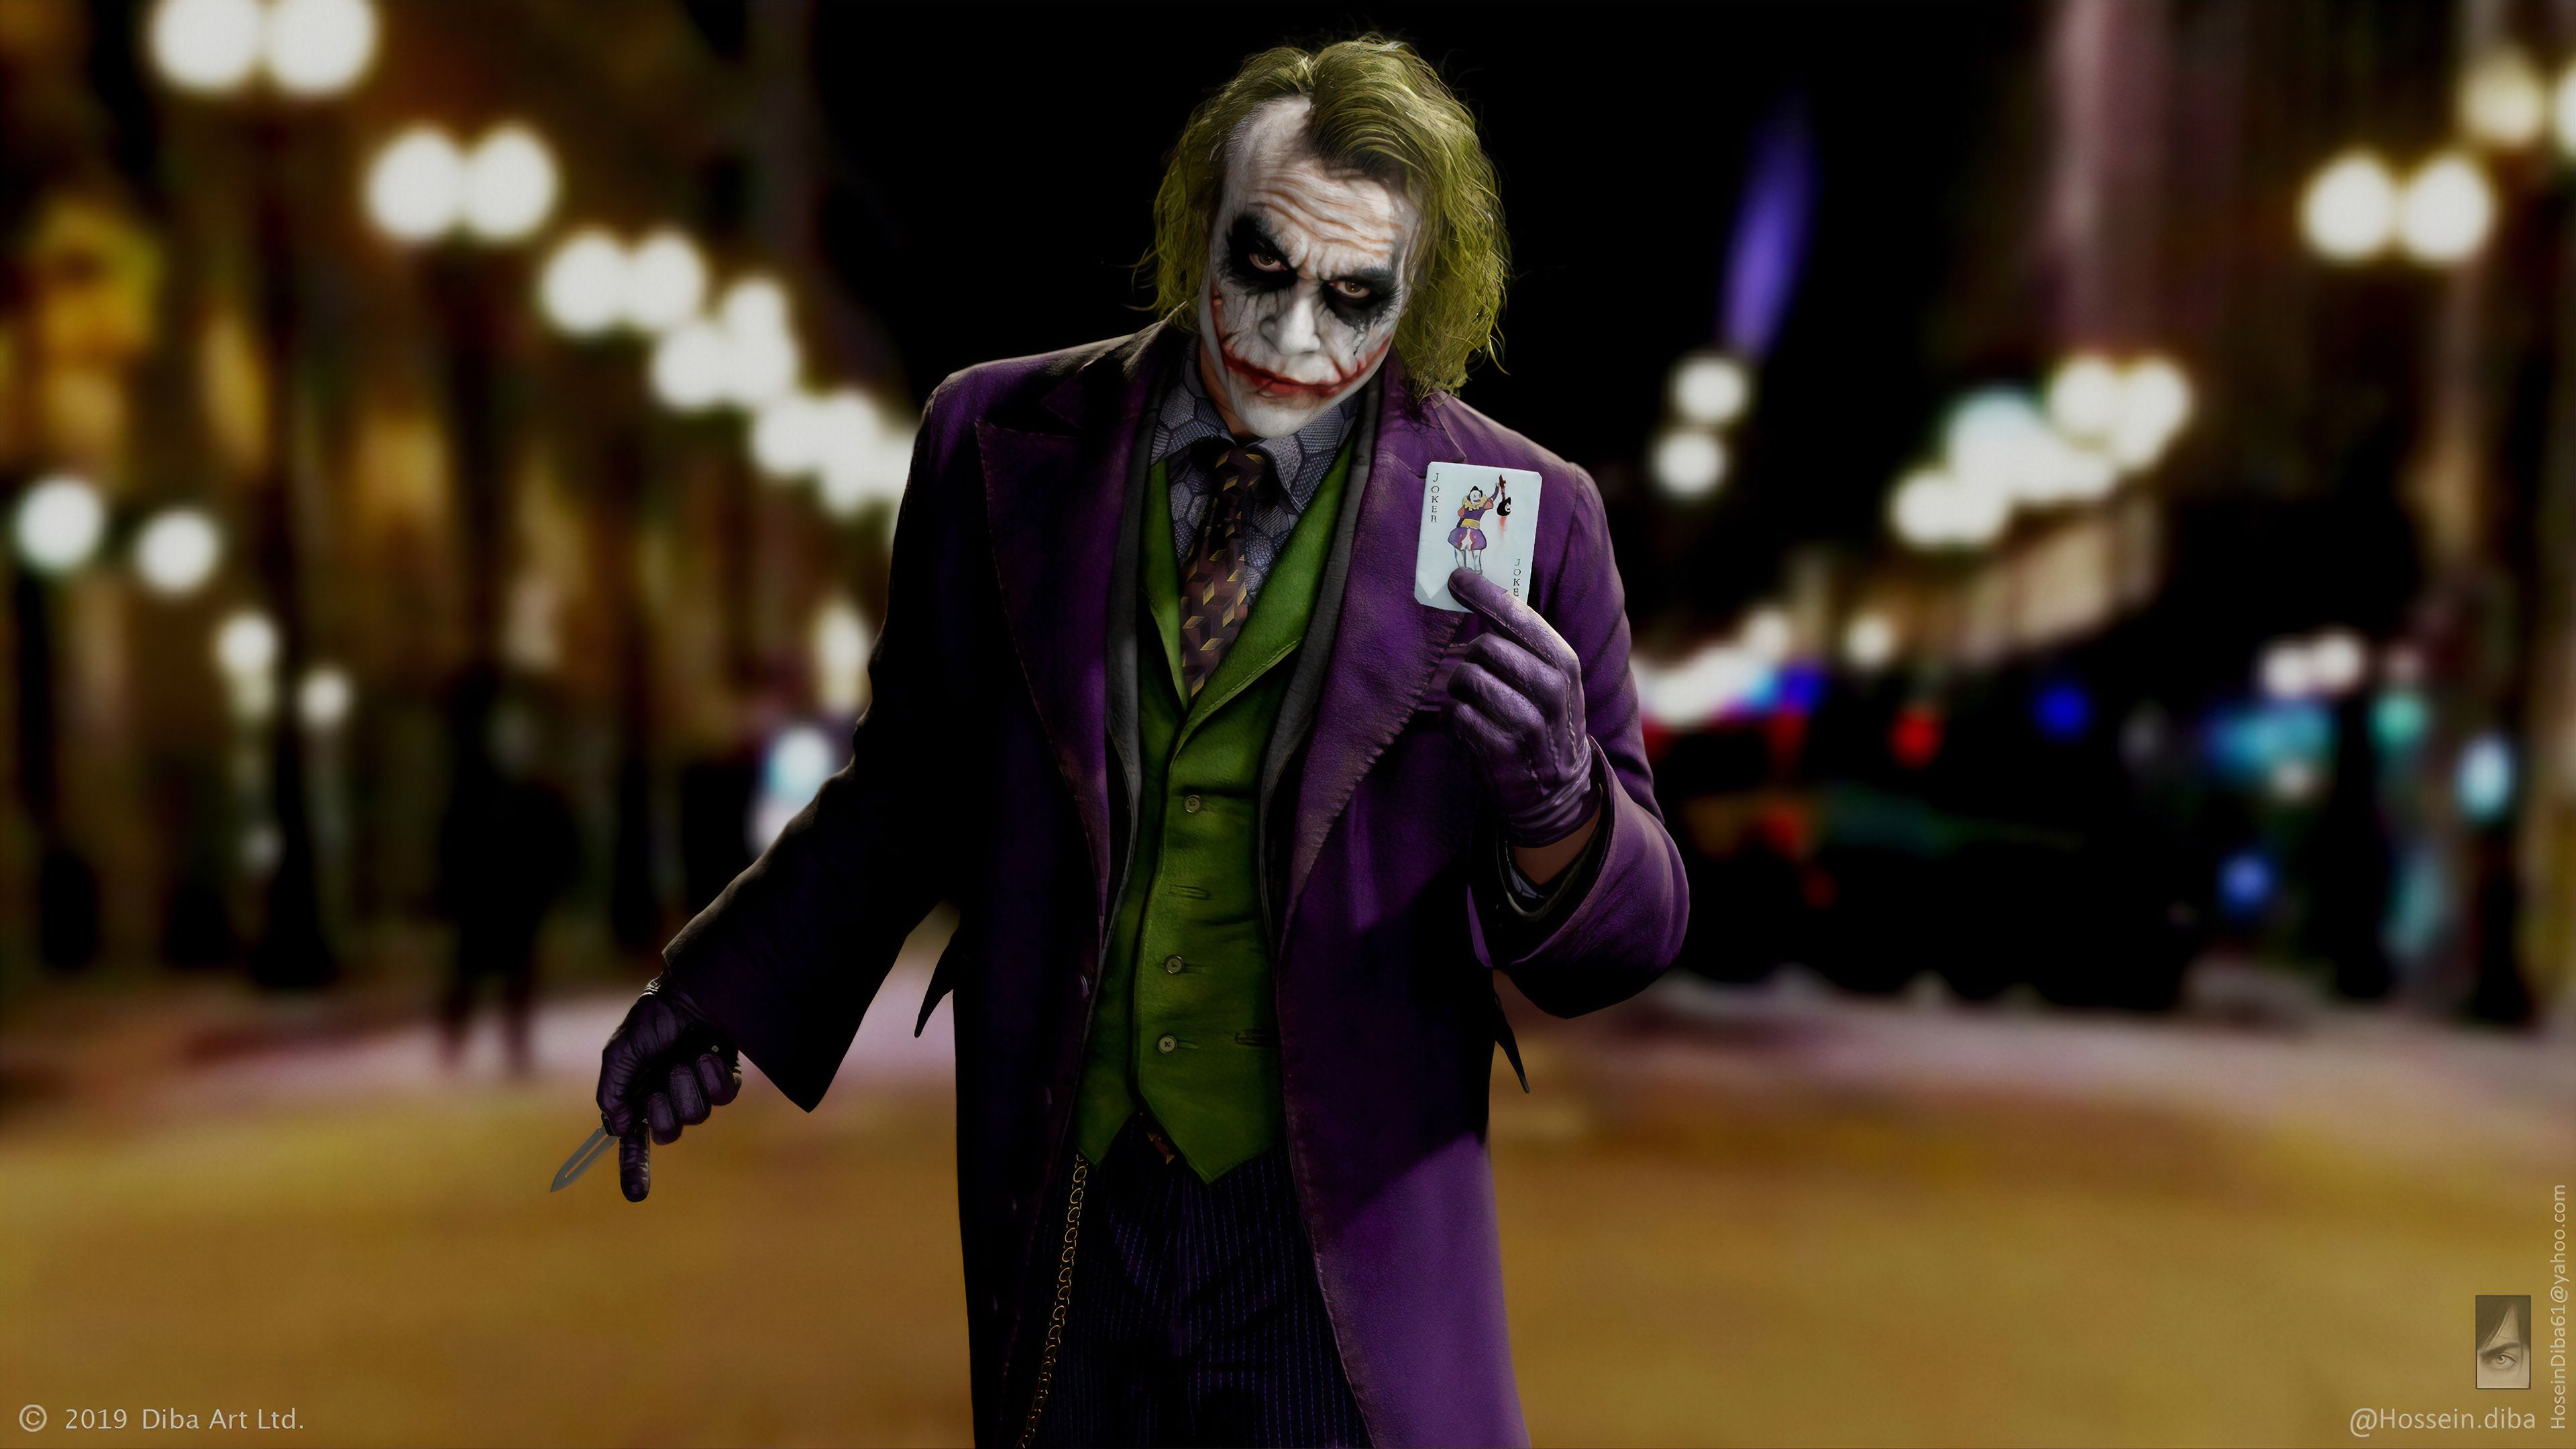 Joker Heath Ledger Flip It 4k 1680x1050 Resolution HD 4k Wallpaper, Image, Background, Photo and Picture